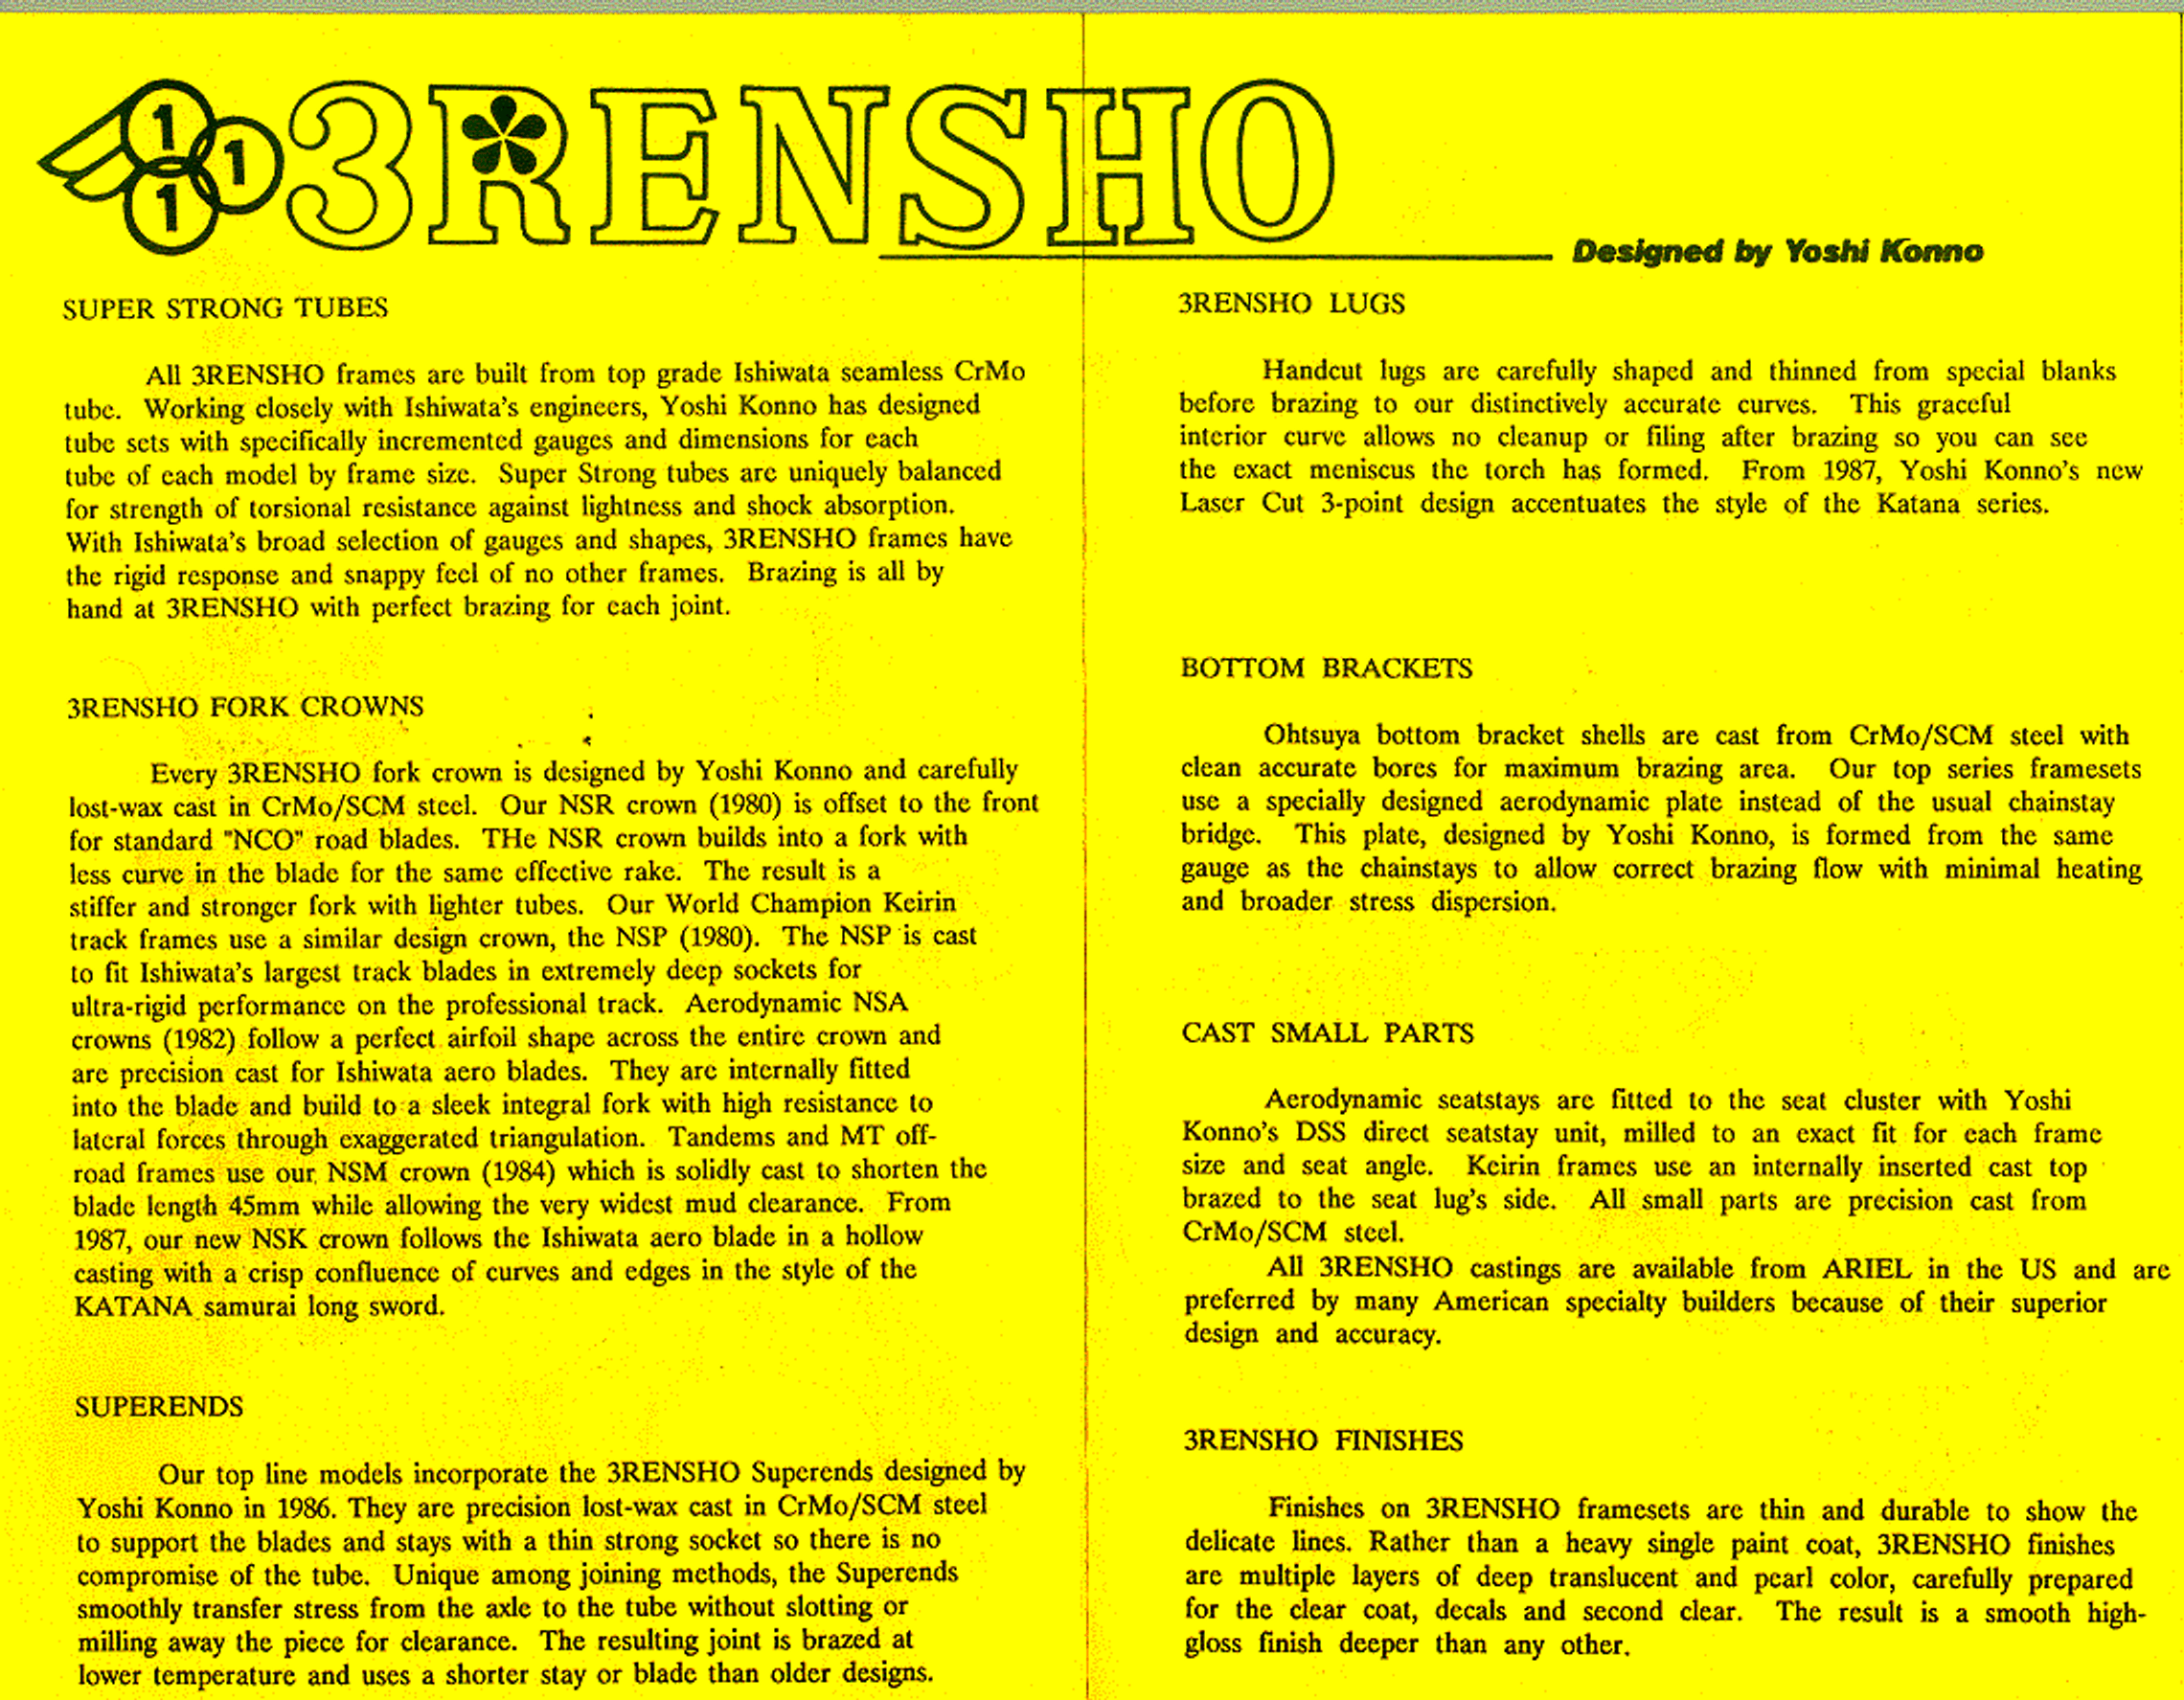 1987 3Rensho catalog scan